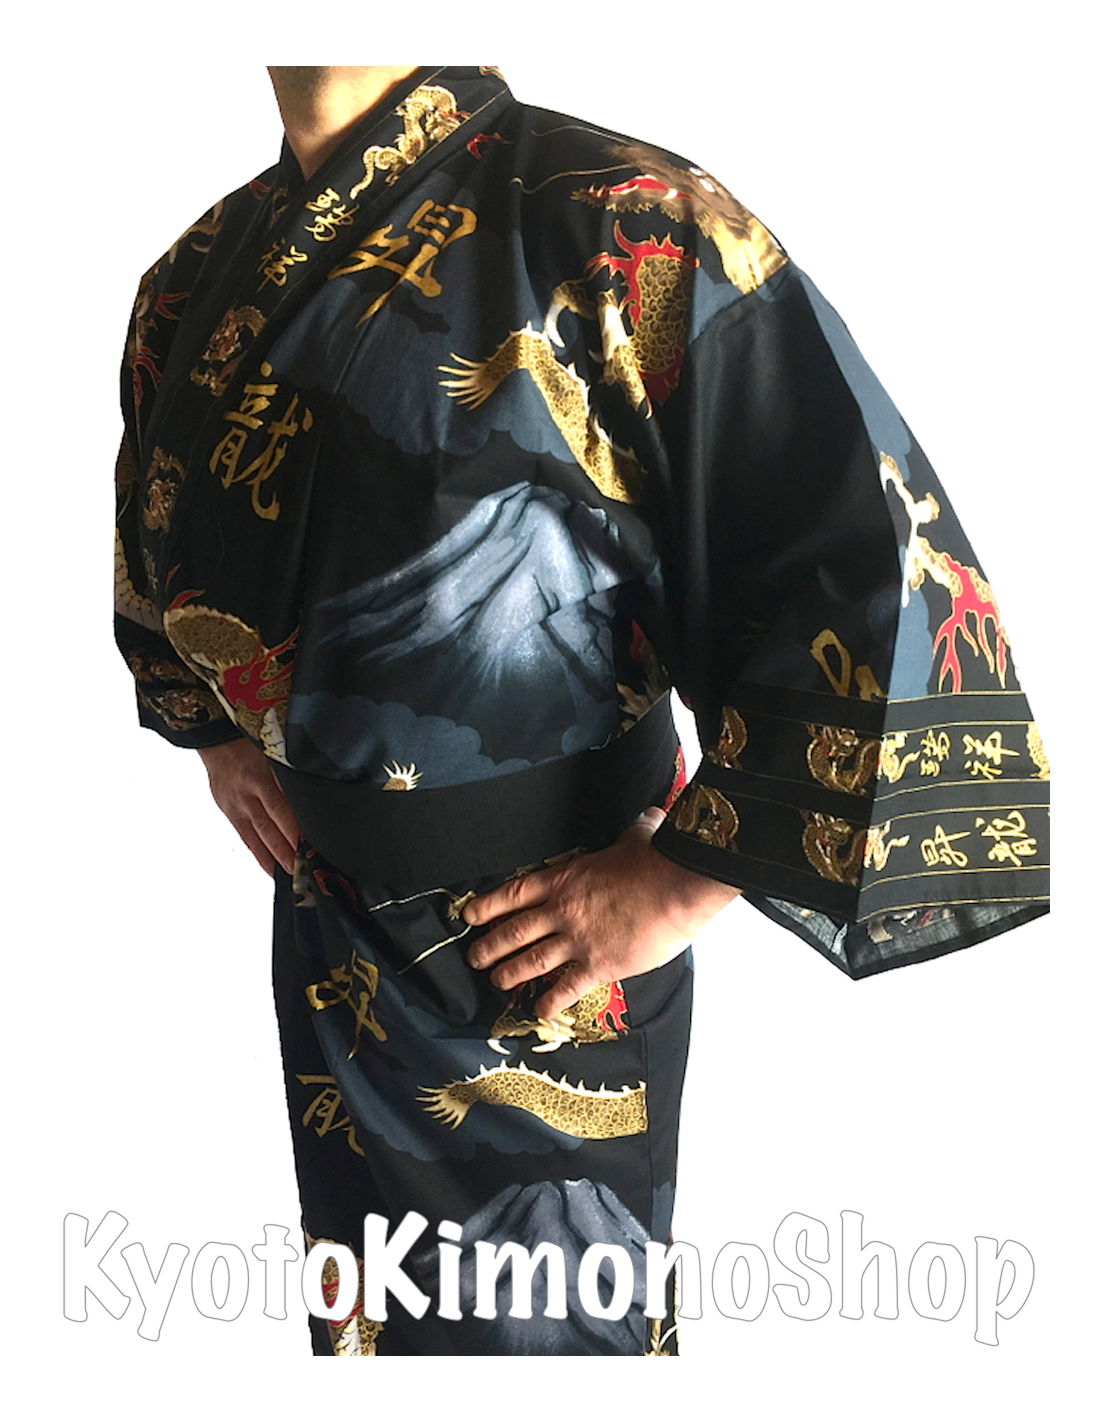 Kleding Herenkleding Pyjamas & Badjassen Jurken Zwart / Marineblauw / Rood Patroon Dragon & Mt FUJI "Made in Kyoto Japan" Yukata Ryu Fuji Men Japanse Kimono Male 100% Katoen 